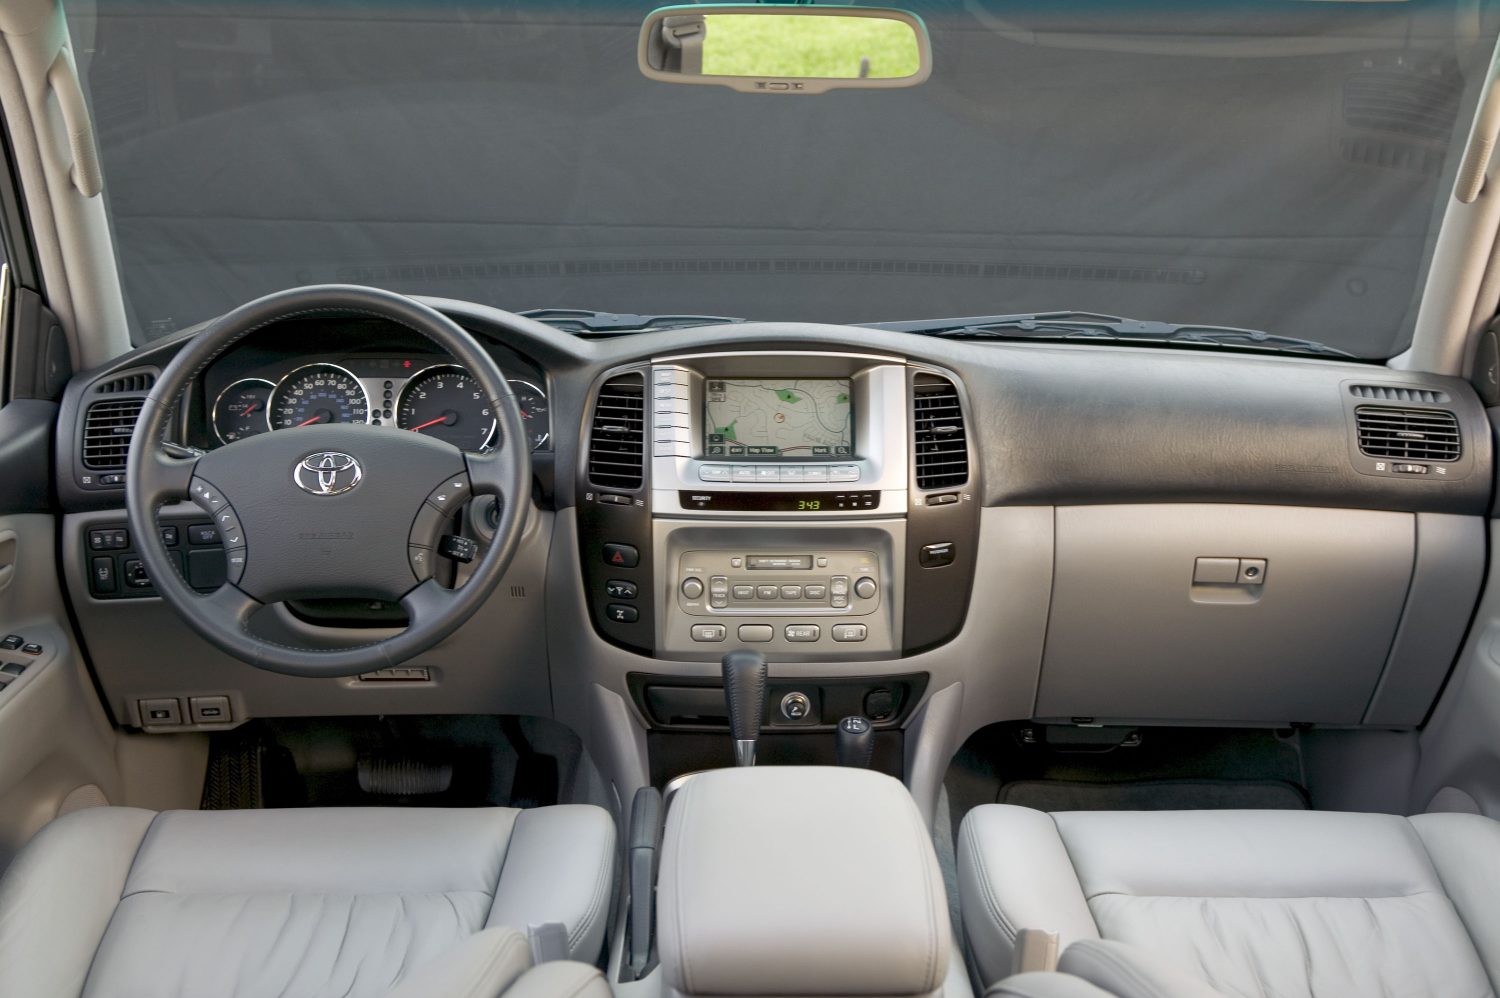 2006-2007 Toyota Land Cruiser interior 015 - Toyota USA Newsroom